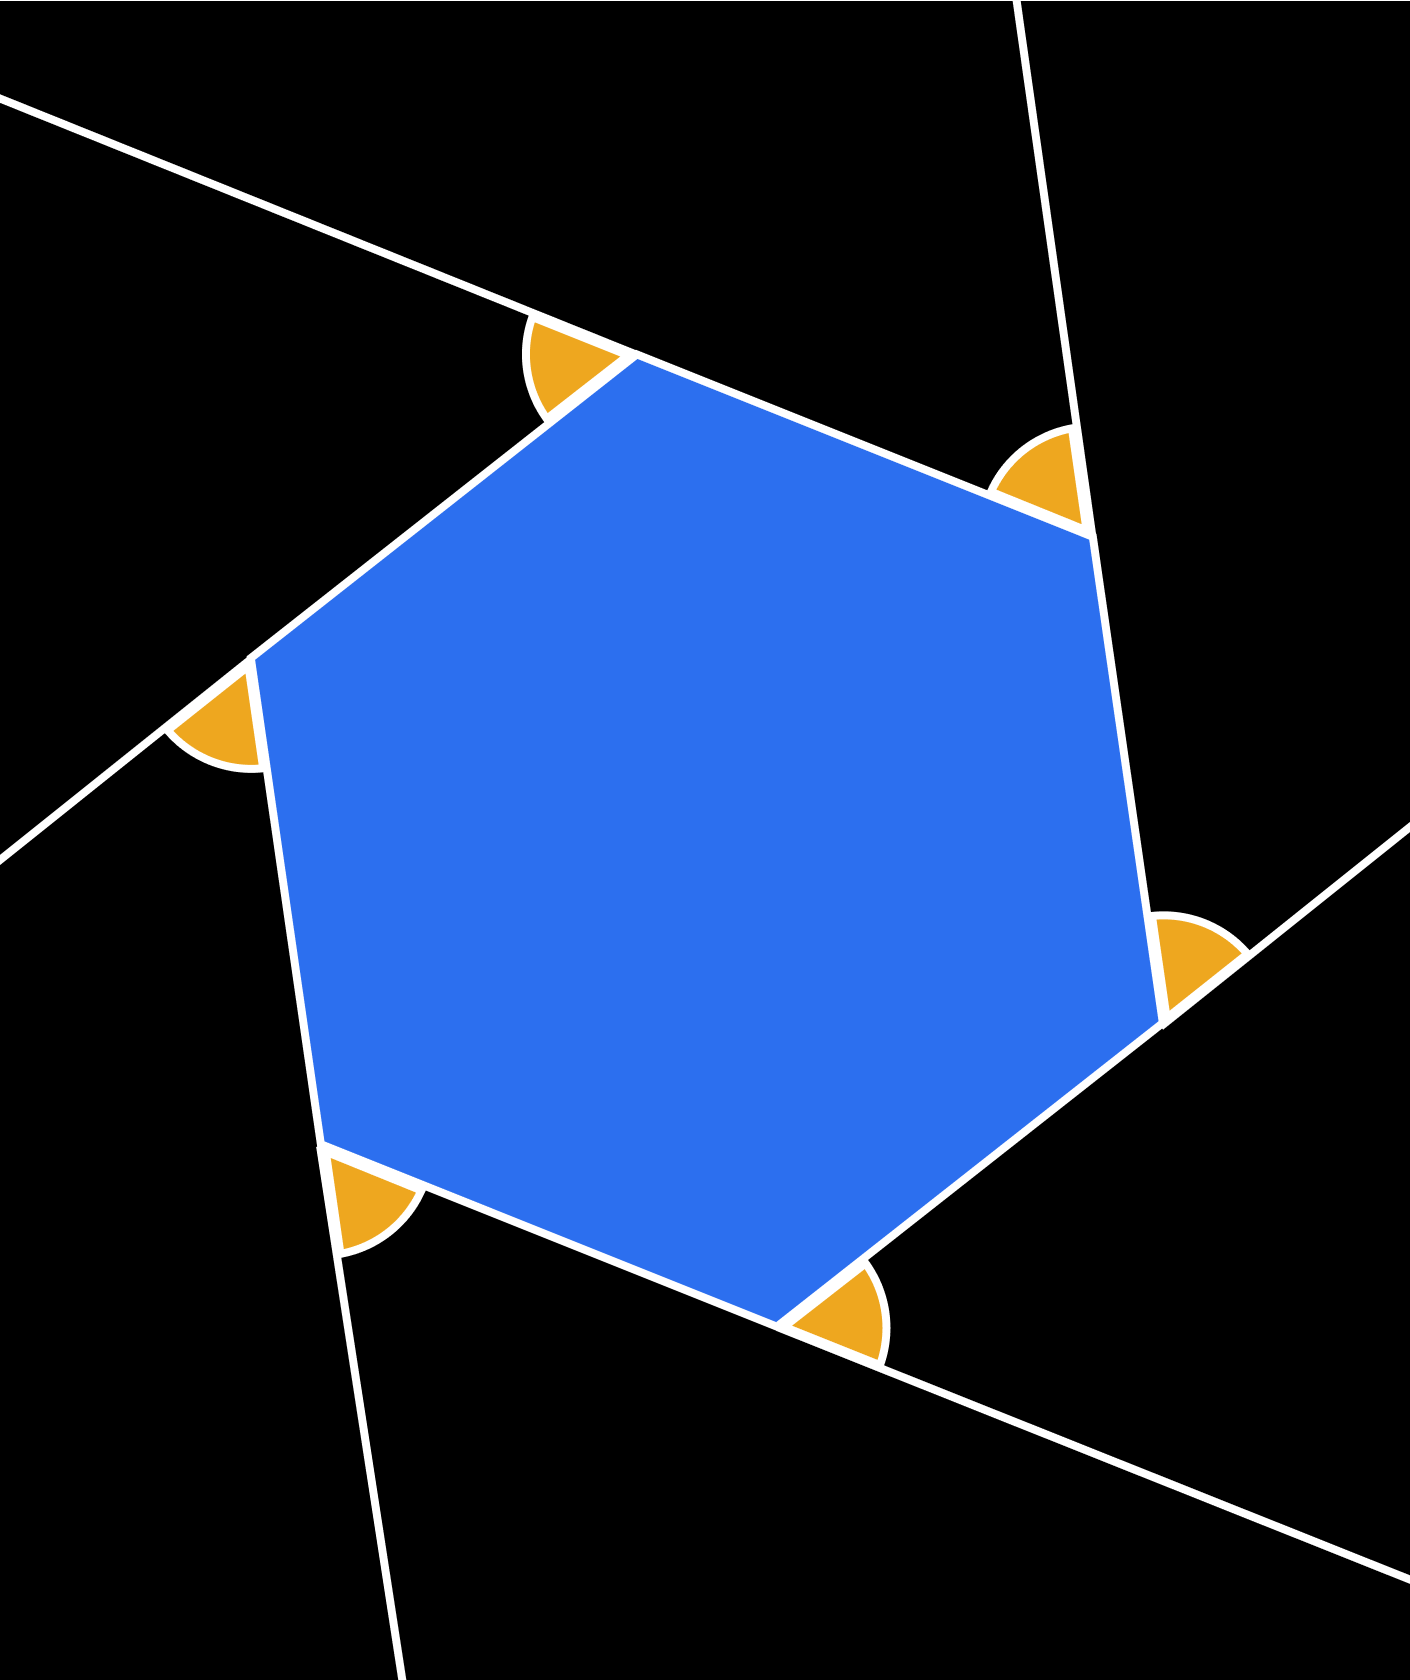 angles_in_polygons_2-tabita